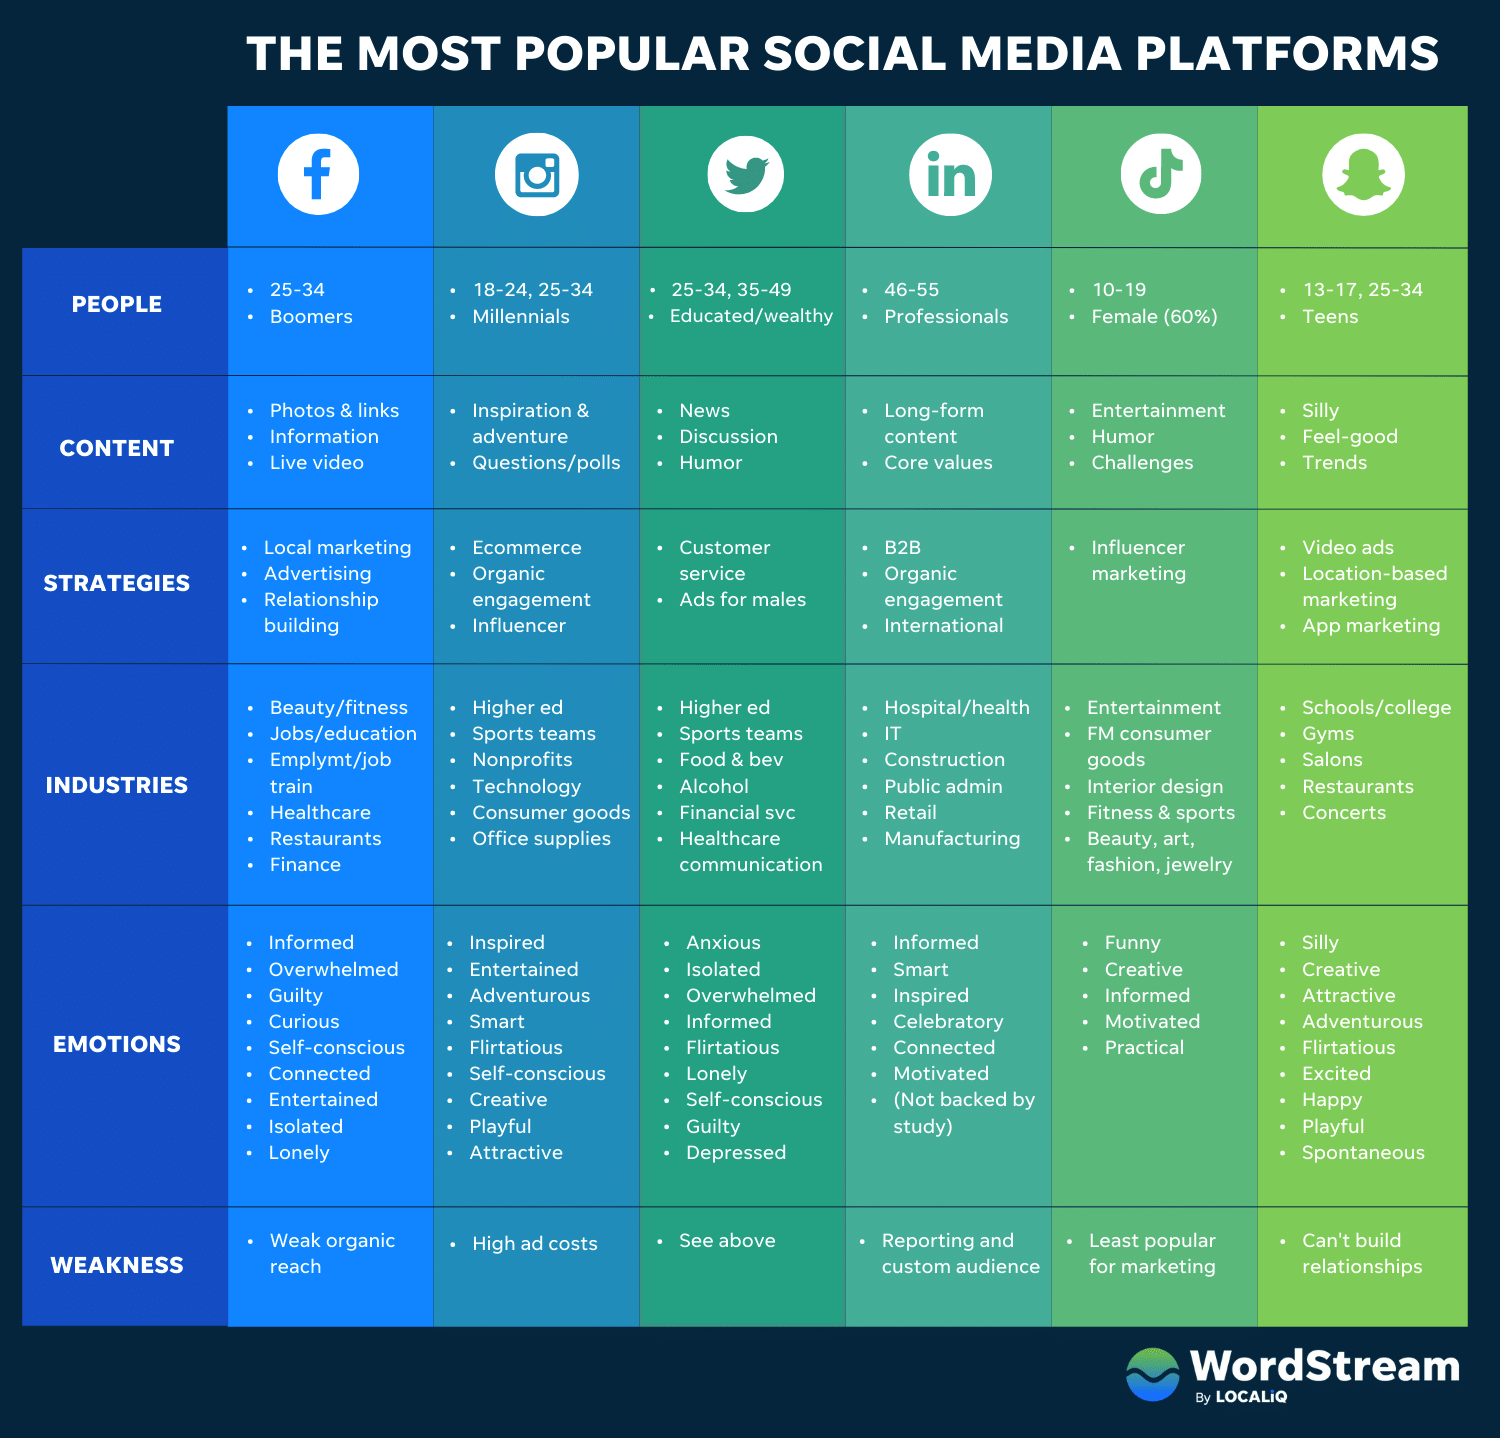 Most popular social networks 2022